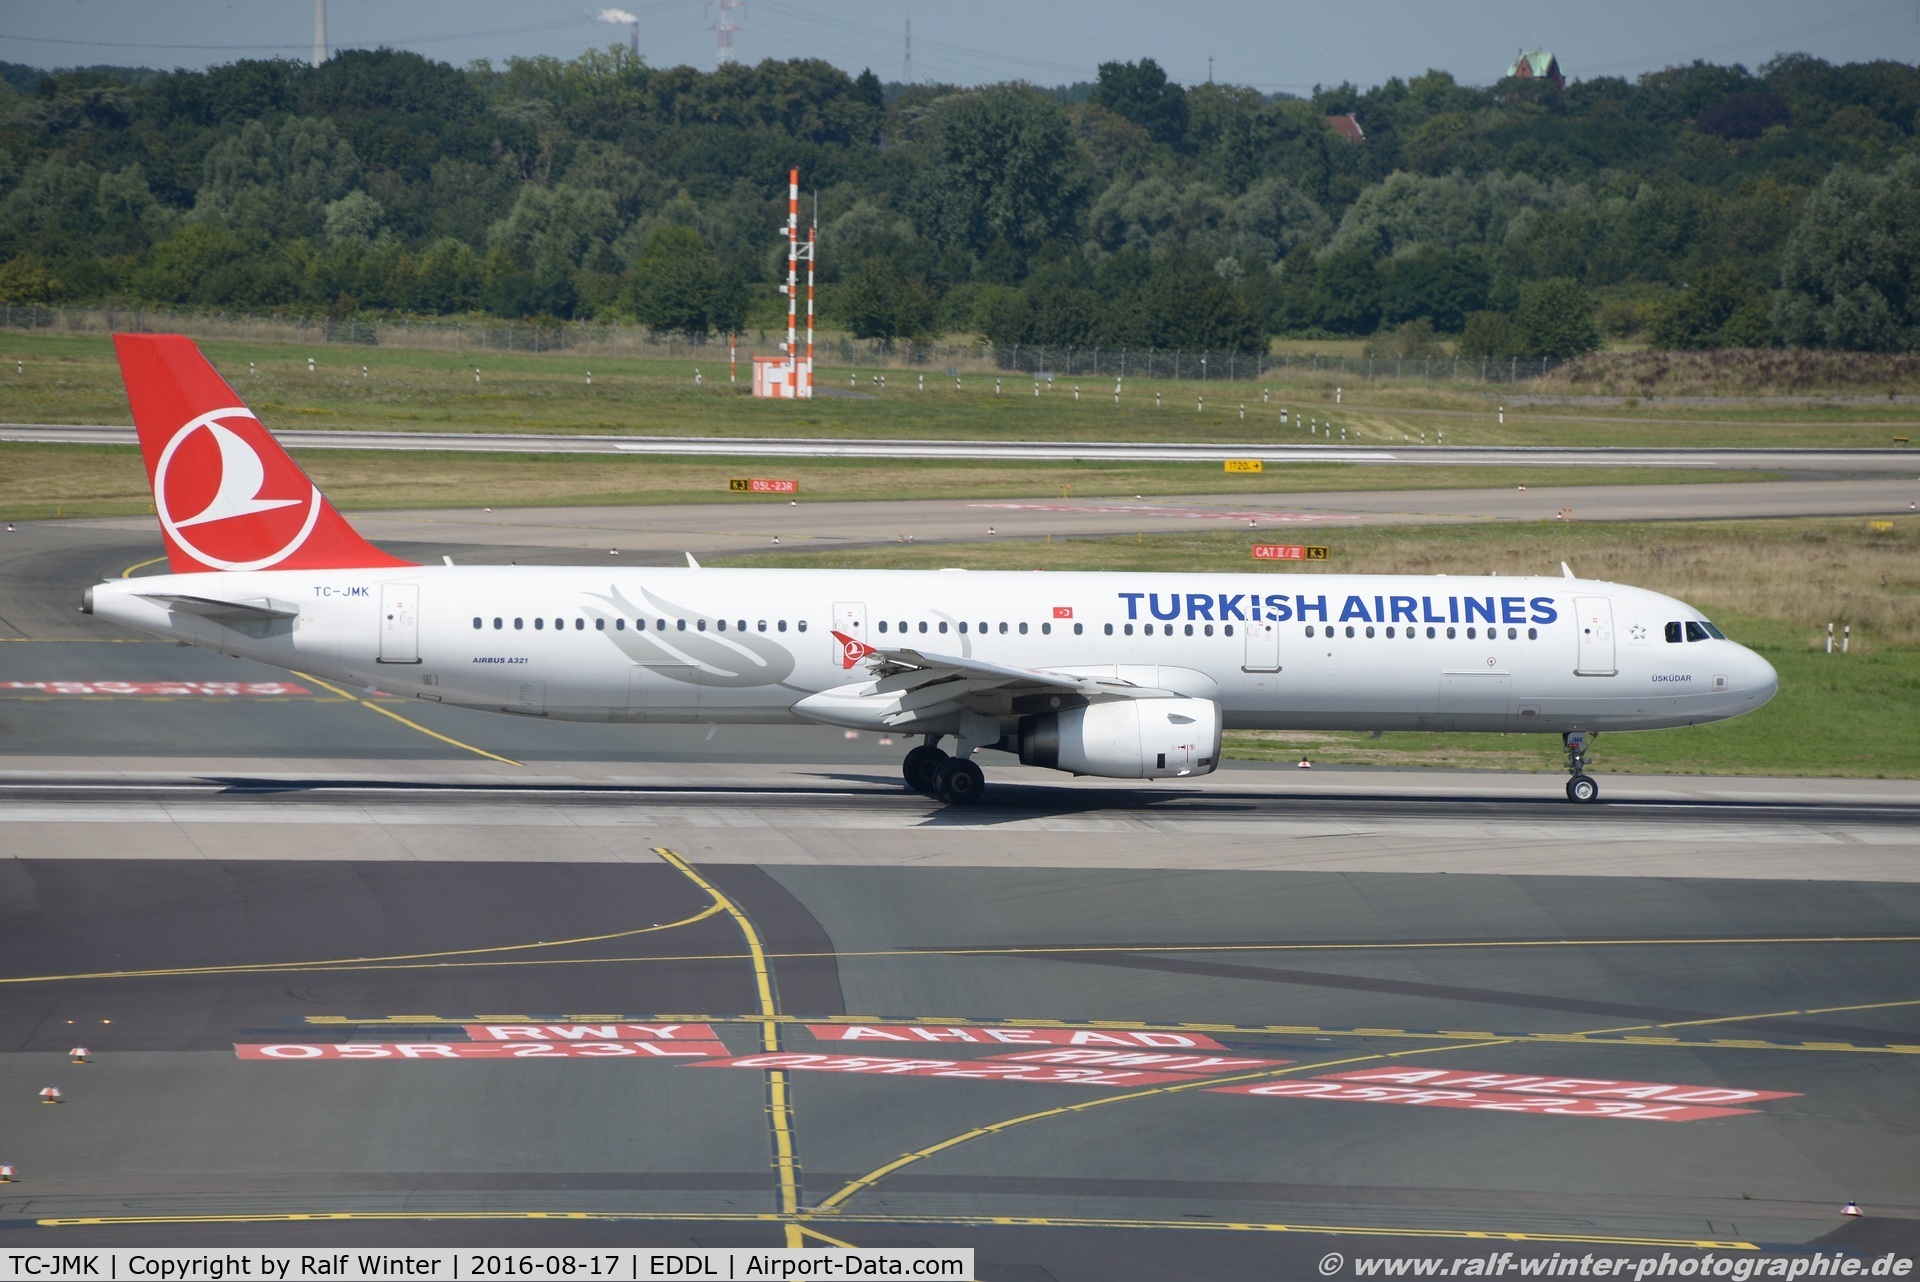 TC-JMK, 2008 Airbus A321-232 C/N 3738, Airbus A321-232 - TK THY Turkish Airlines 'Uskudar' - 3738 - TC-JMK - 17.08.2016 - DUS